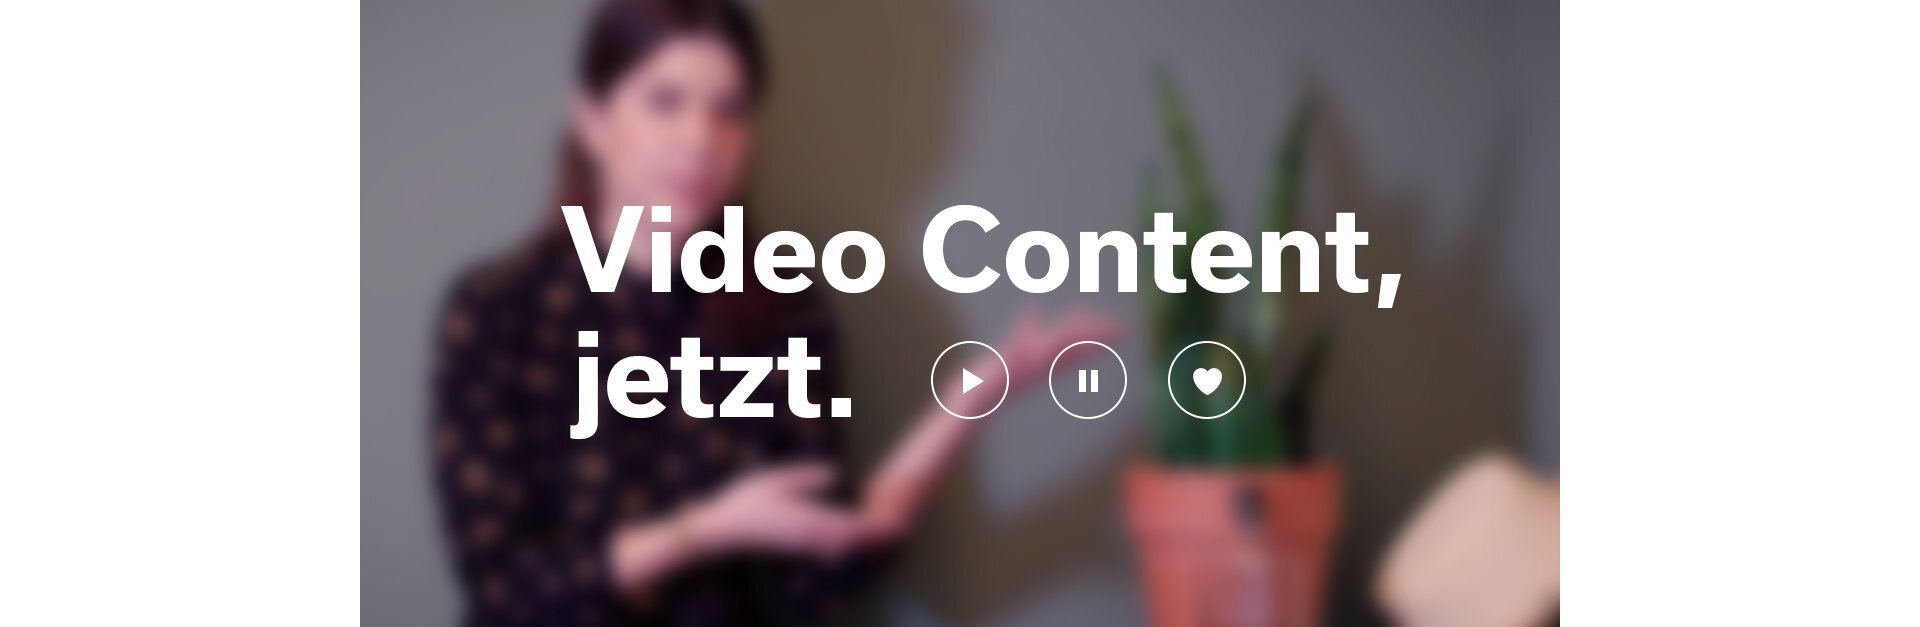 Video Content jetzt